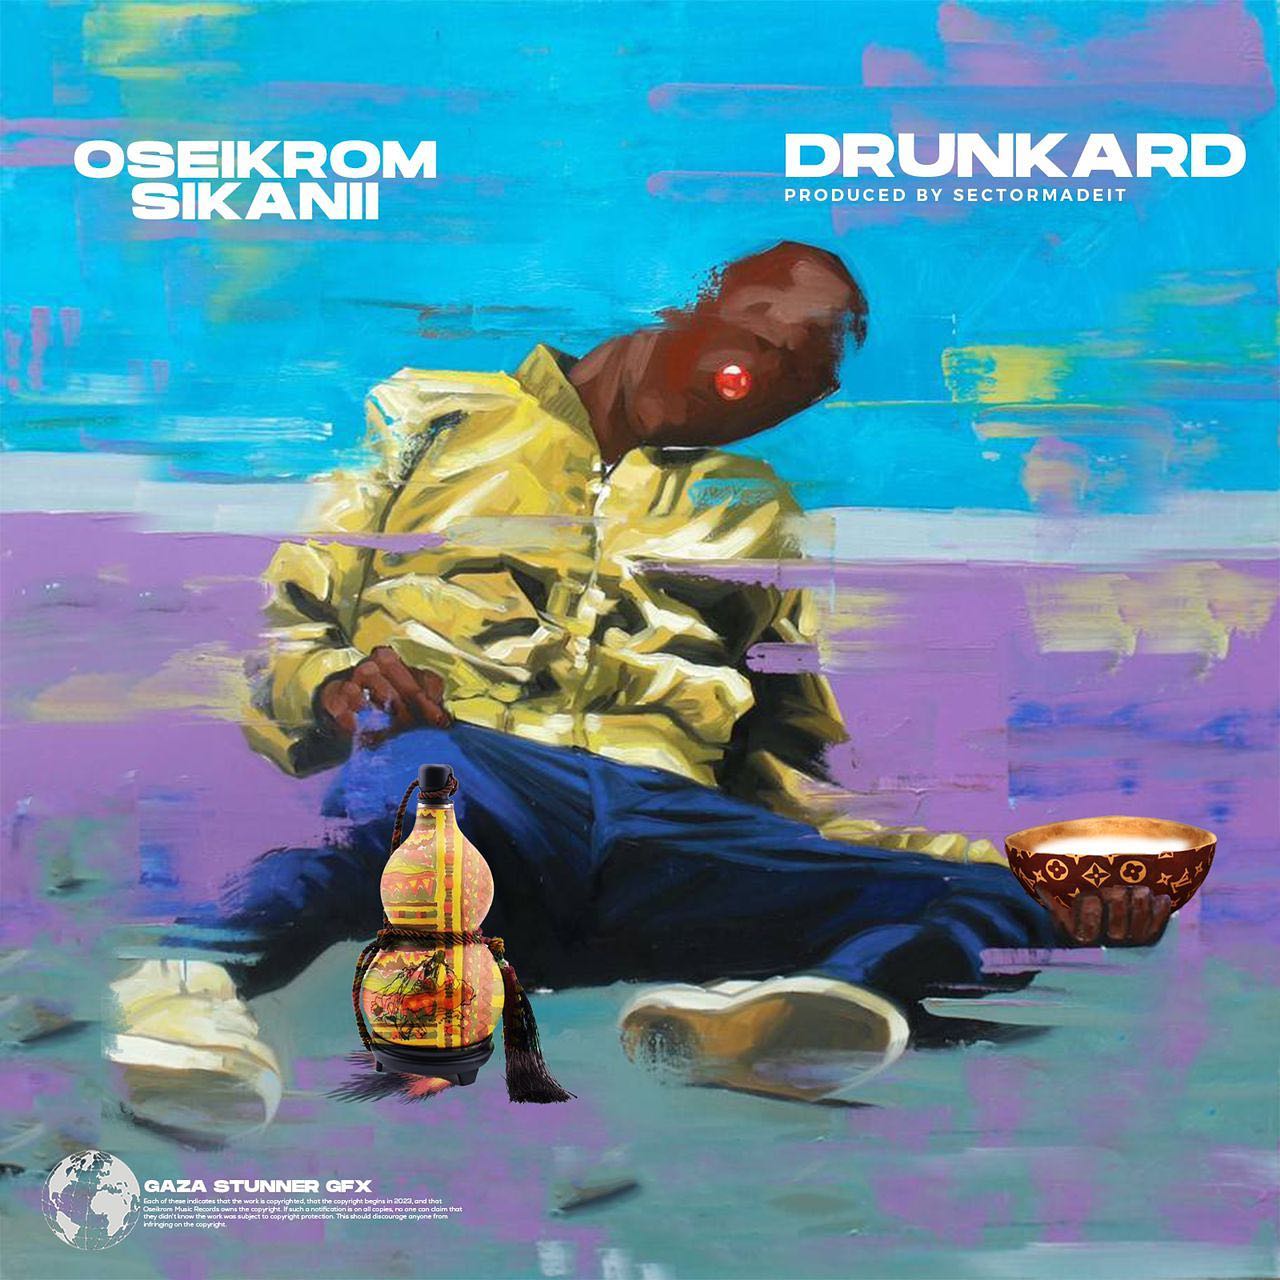 Oseikrom Sikanii Drunkard Tmmotiongh.com